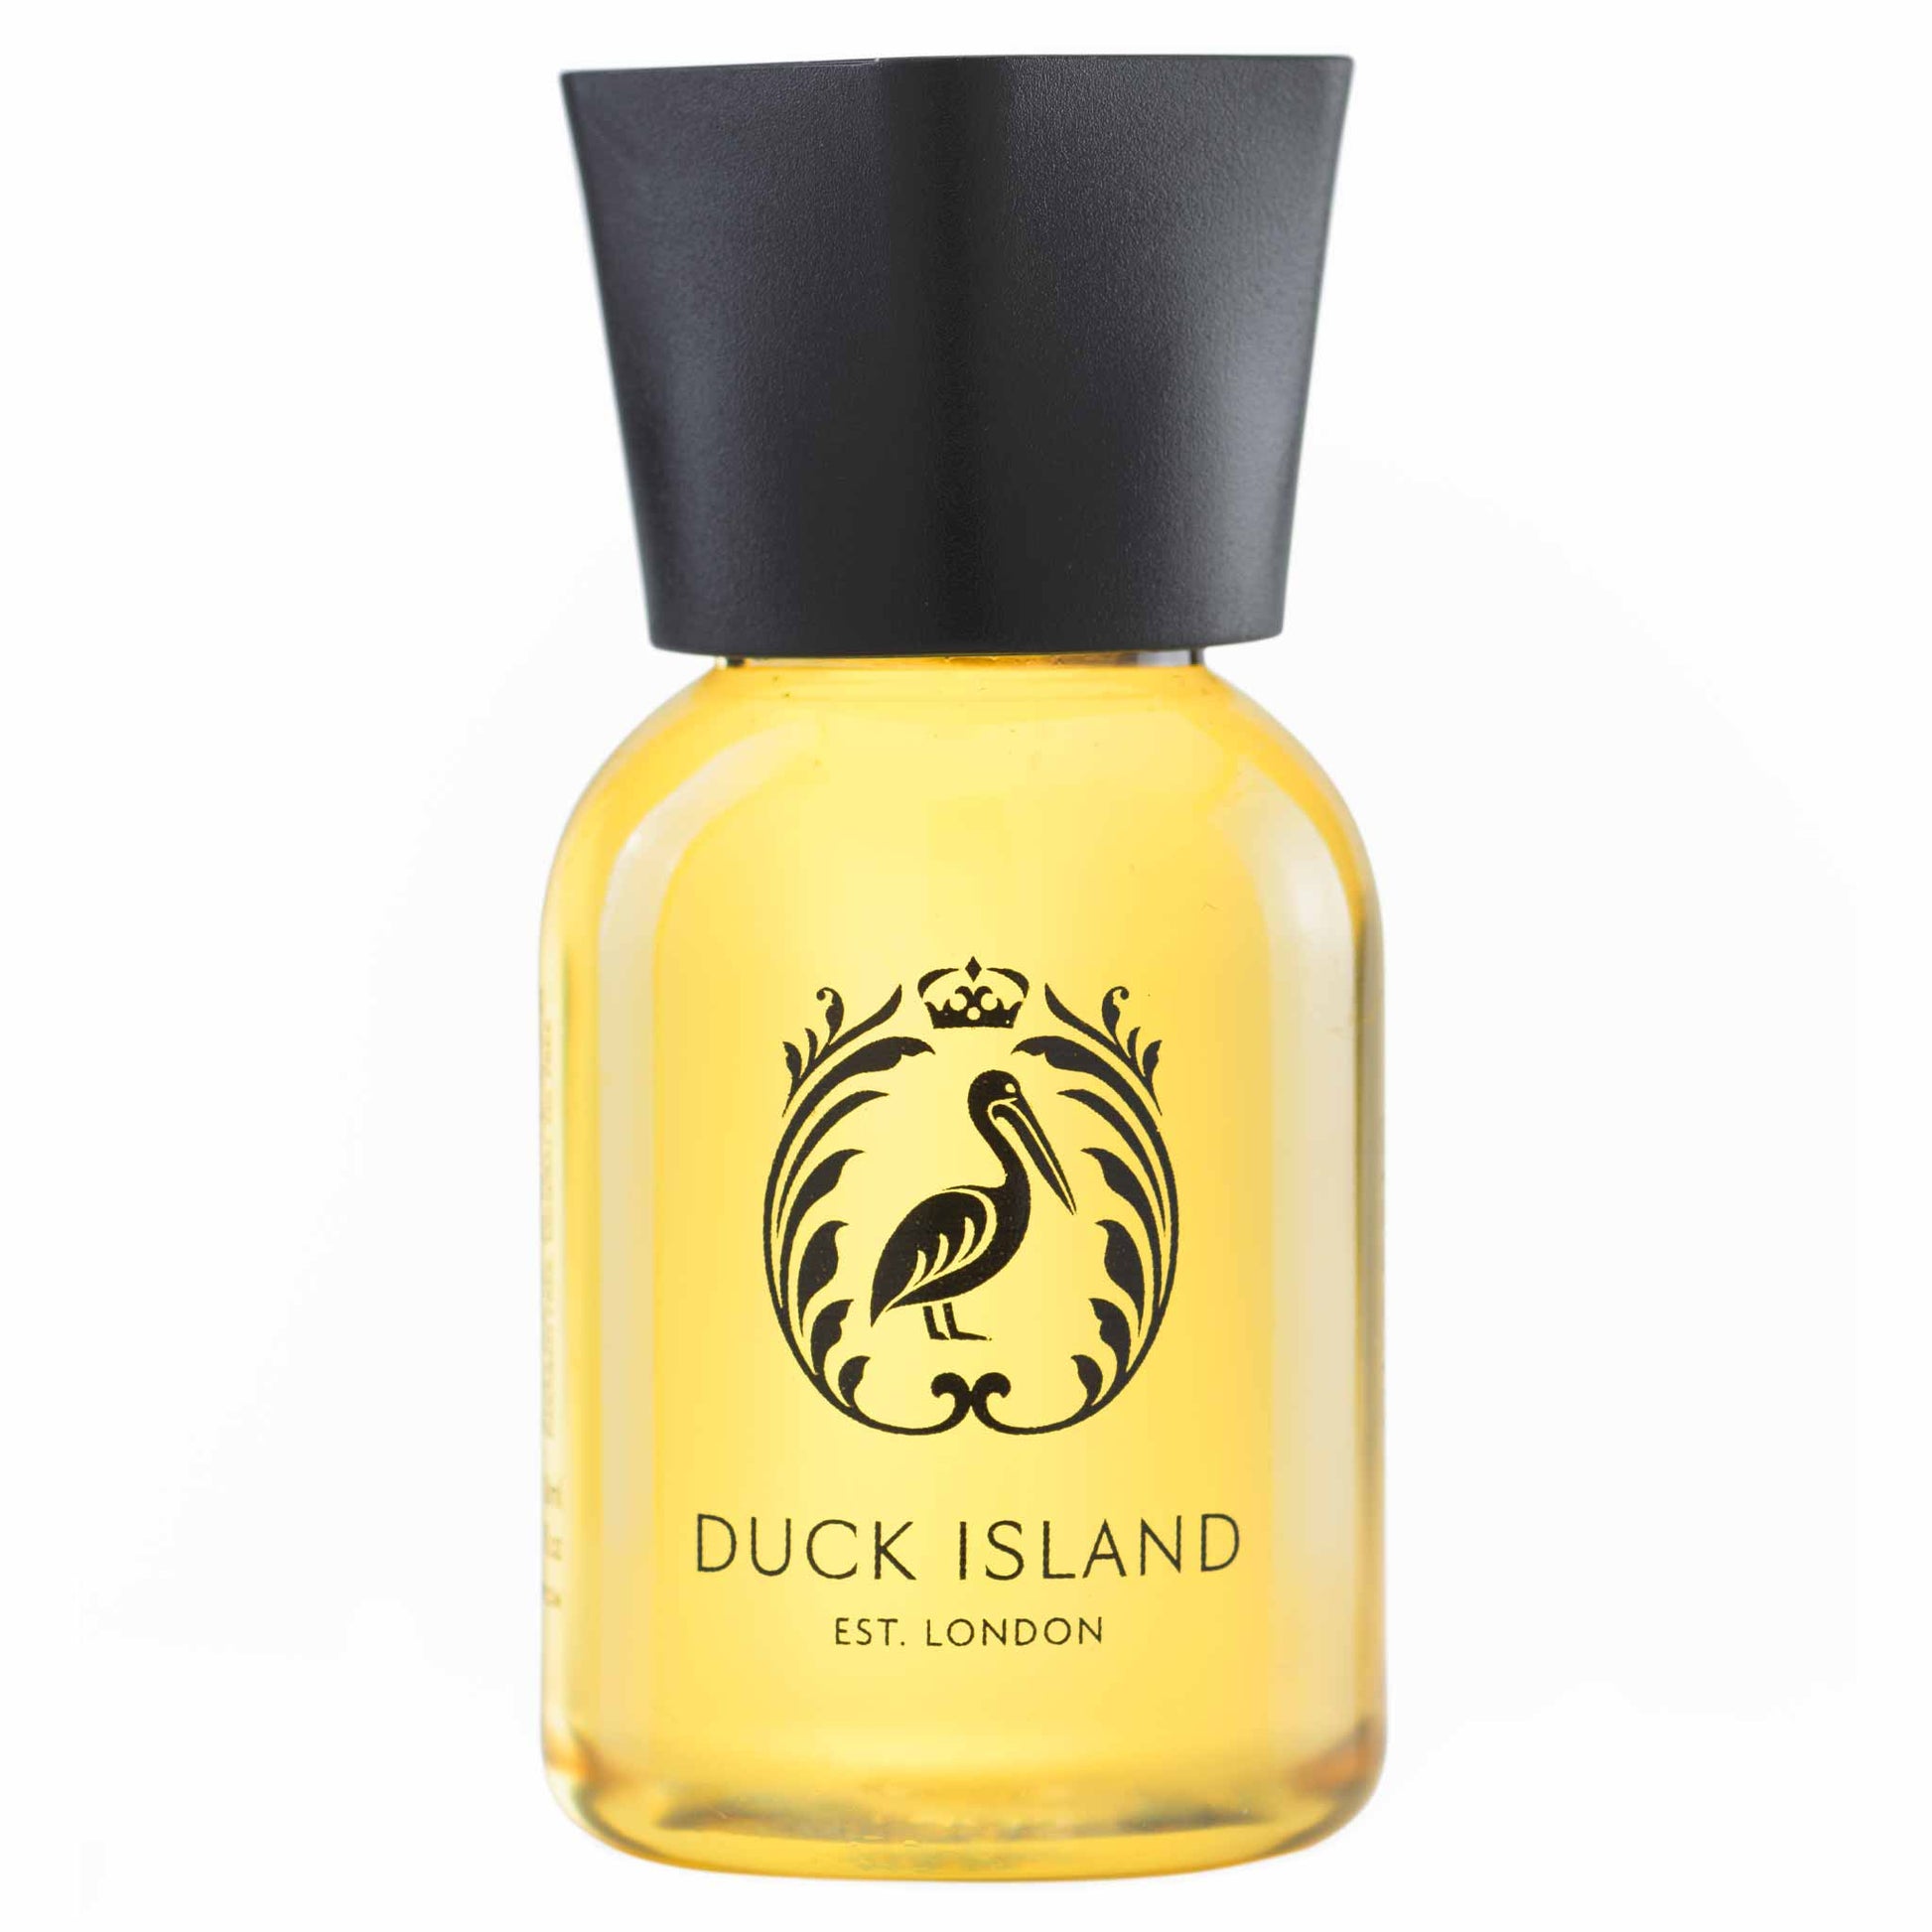 Duck Island Classic shampoo in miniature 30ml bottle